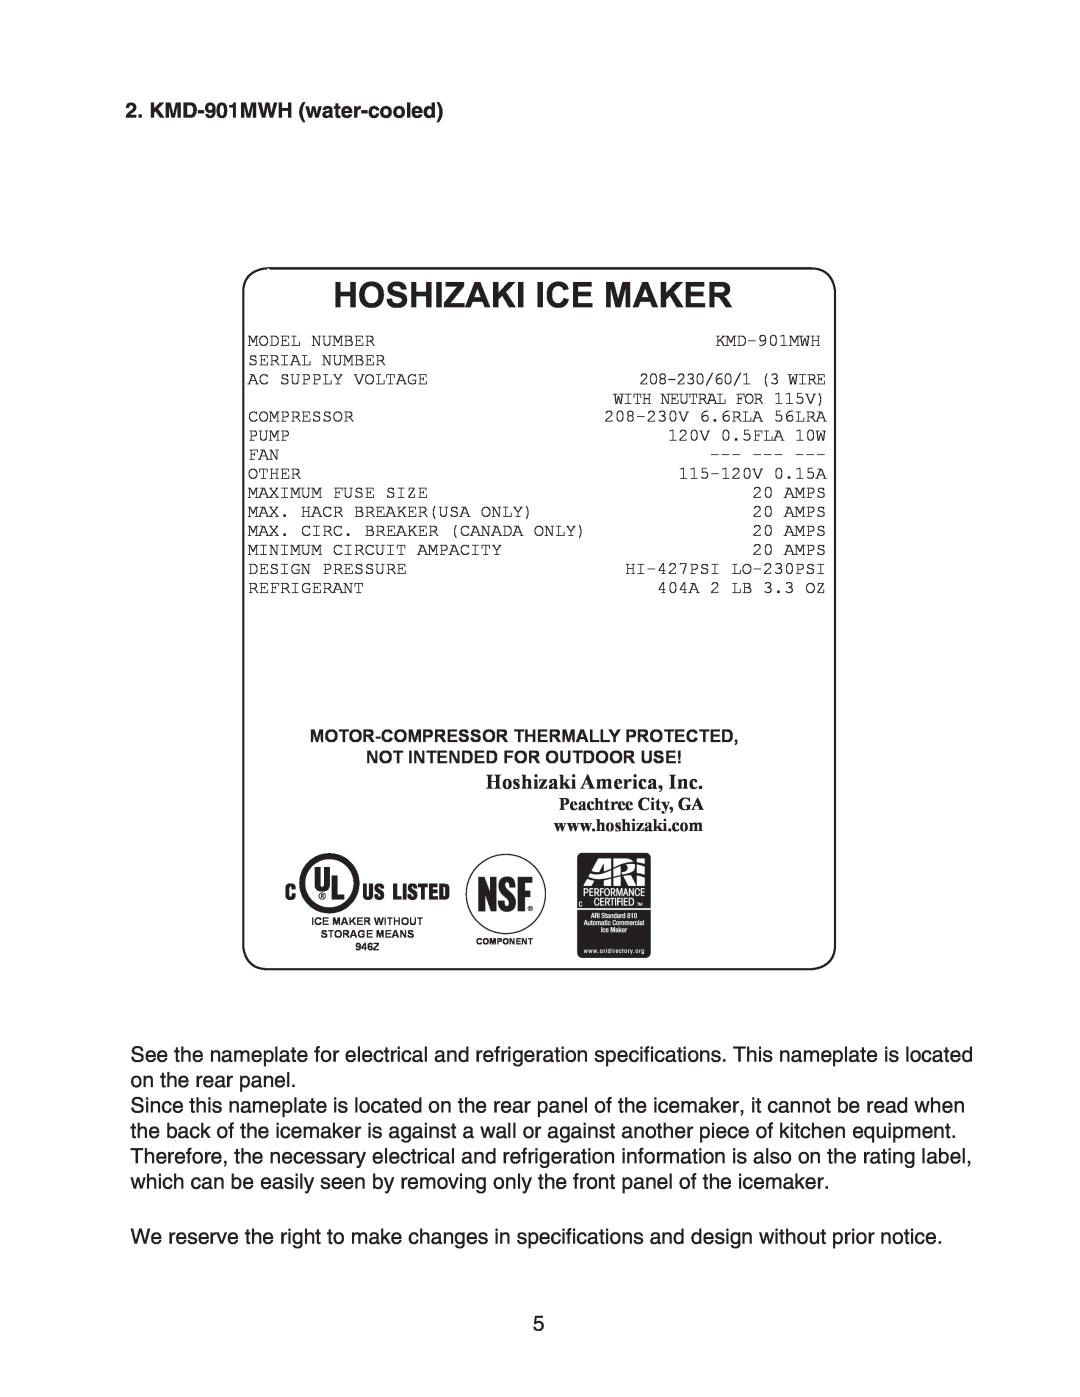 Hoshizaki KMD-901MAH, KMD-901MRH instruction manual KMD-901MWH water-cooled, Hoshizaki Ice Maker, Hoshizaki America, Inc 